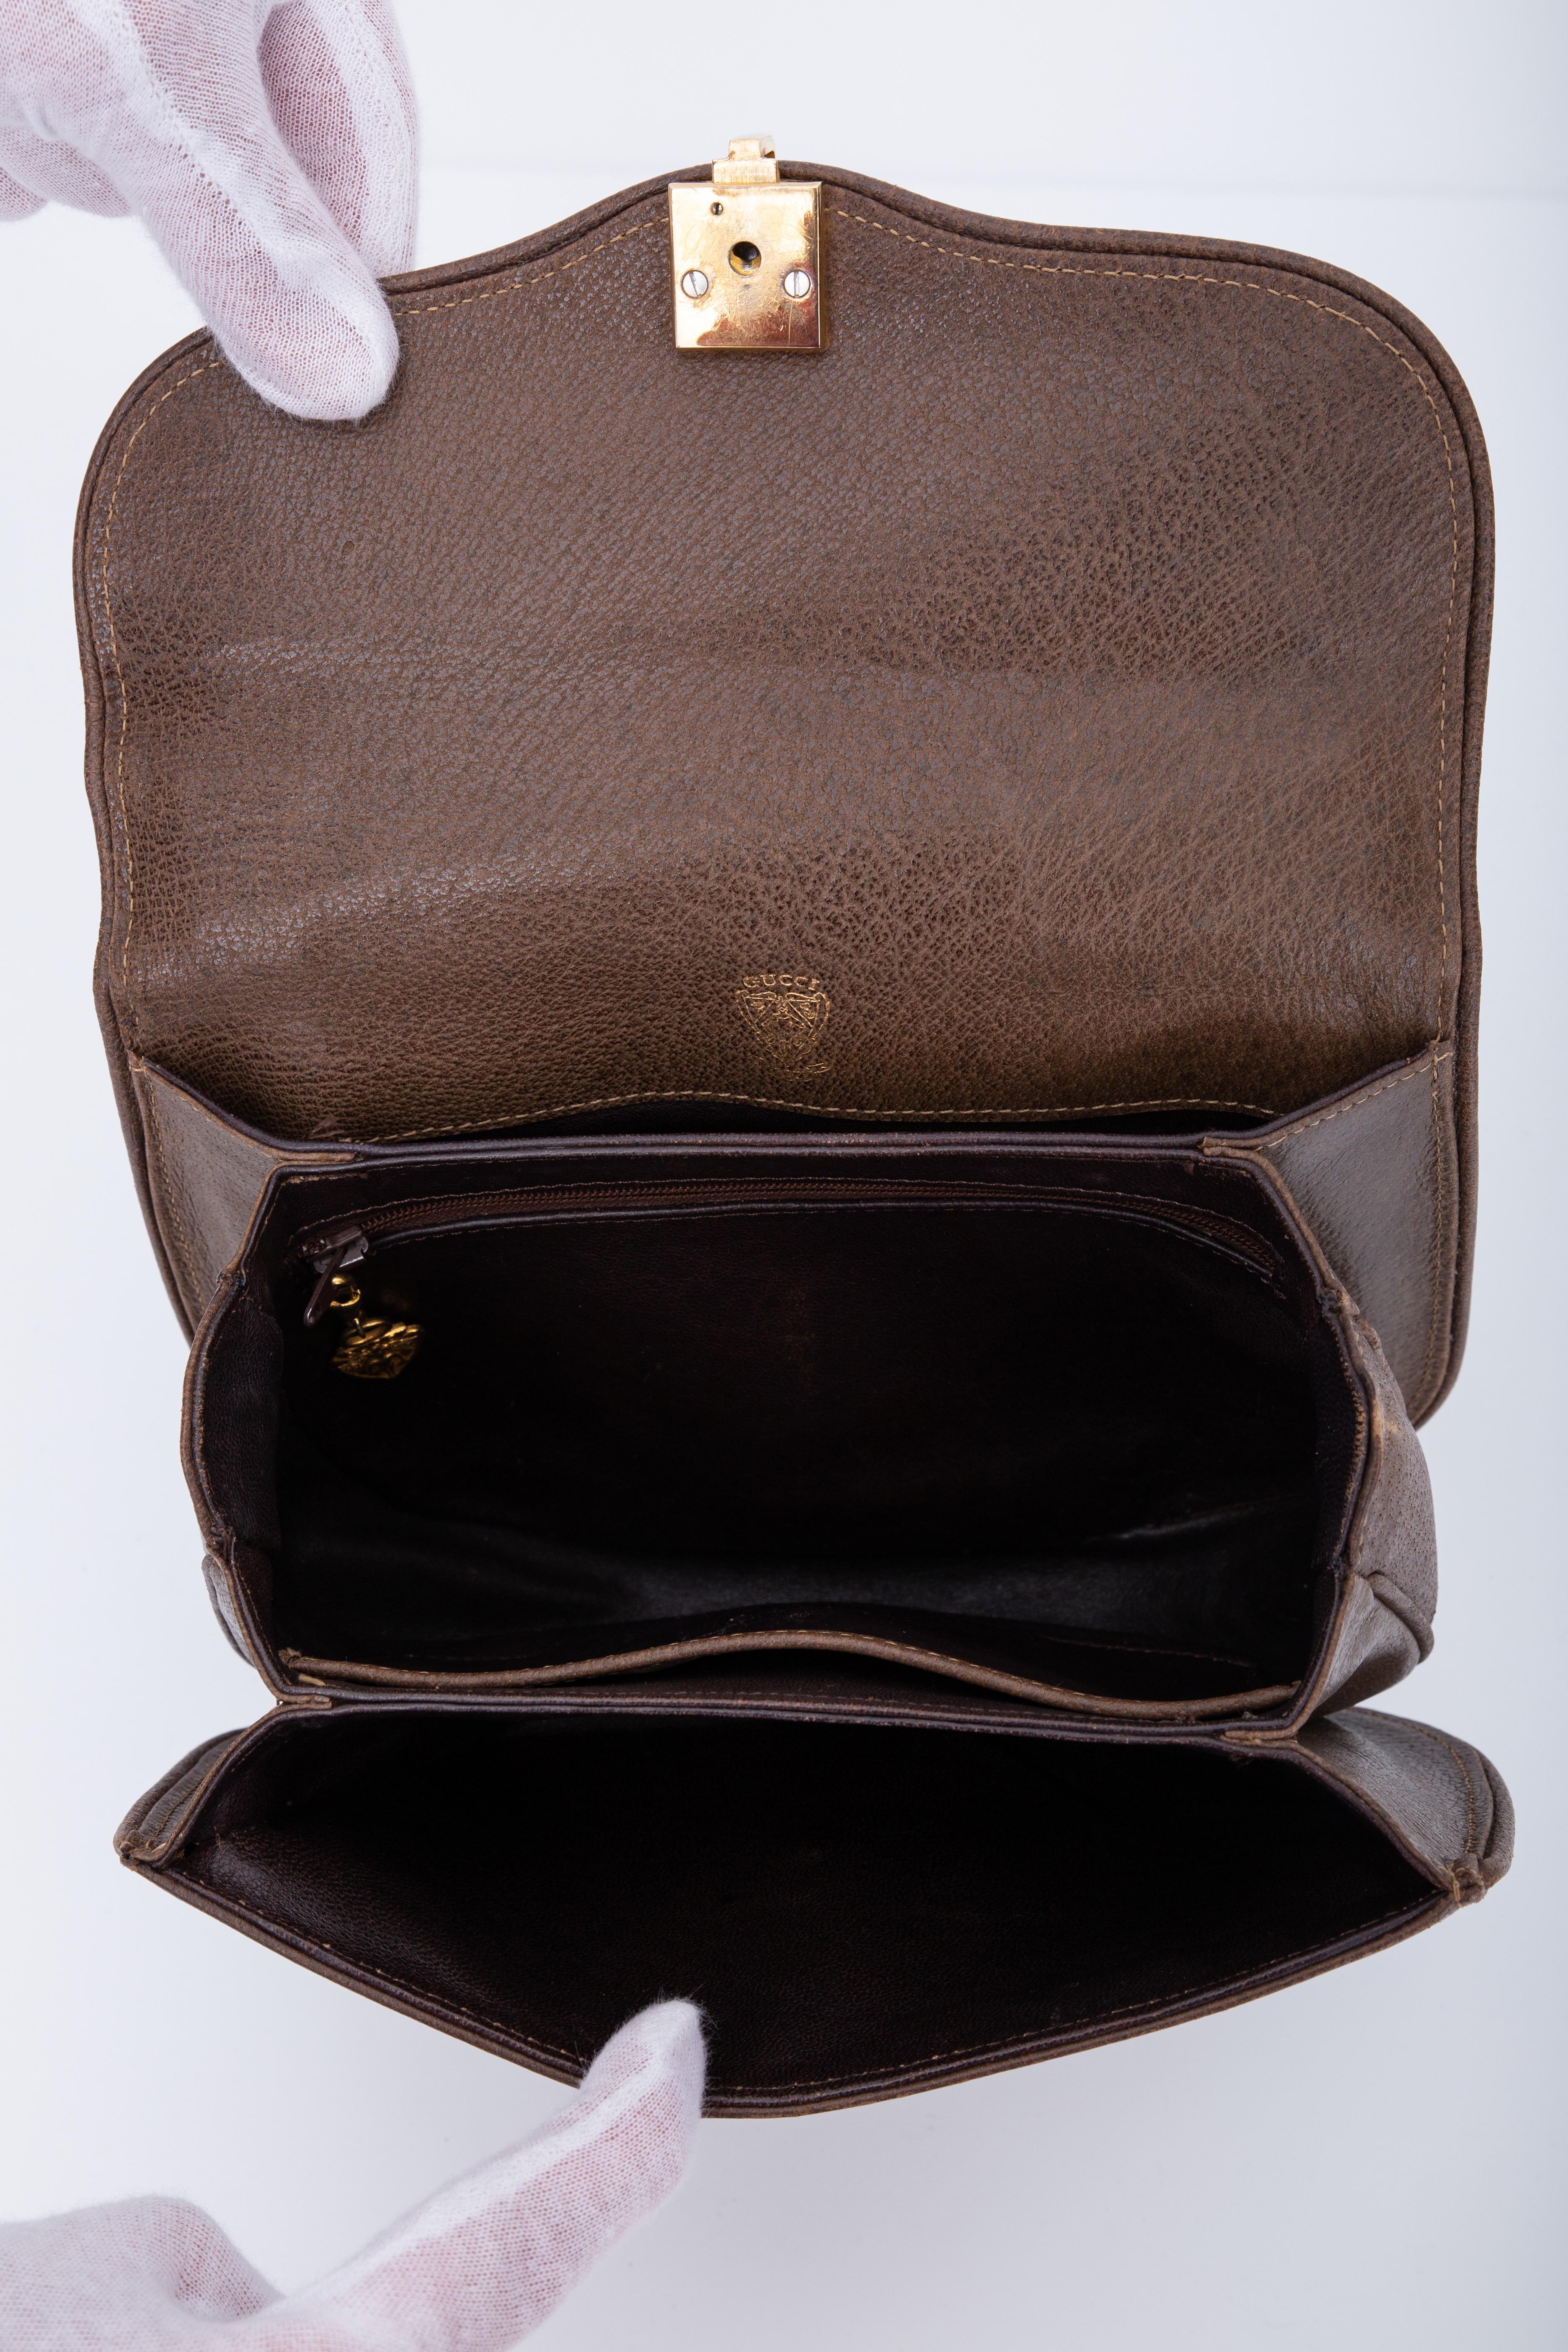 Gucci Vintage Brown Leather Gg Flip Lock Handbag (Circa 1955) Rare For Sale 2